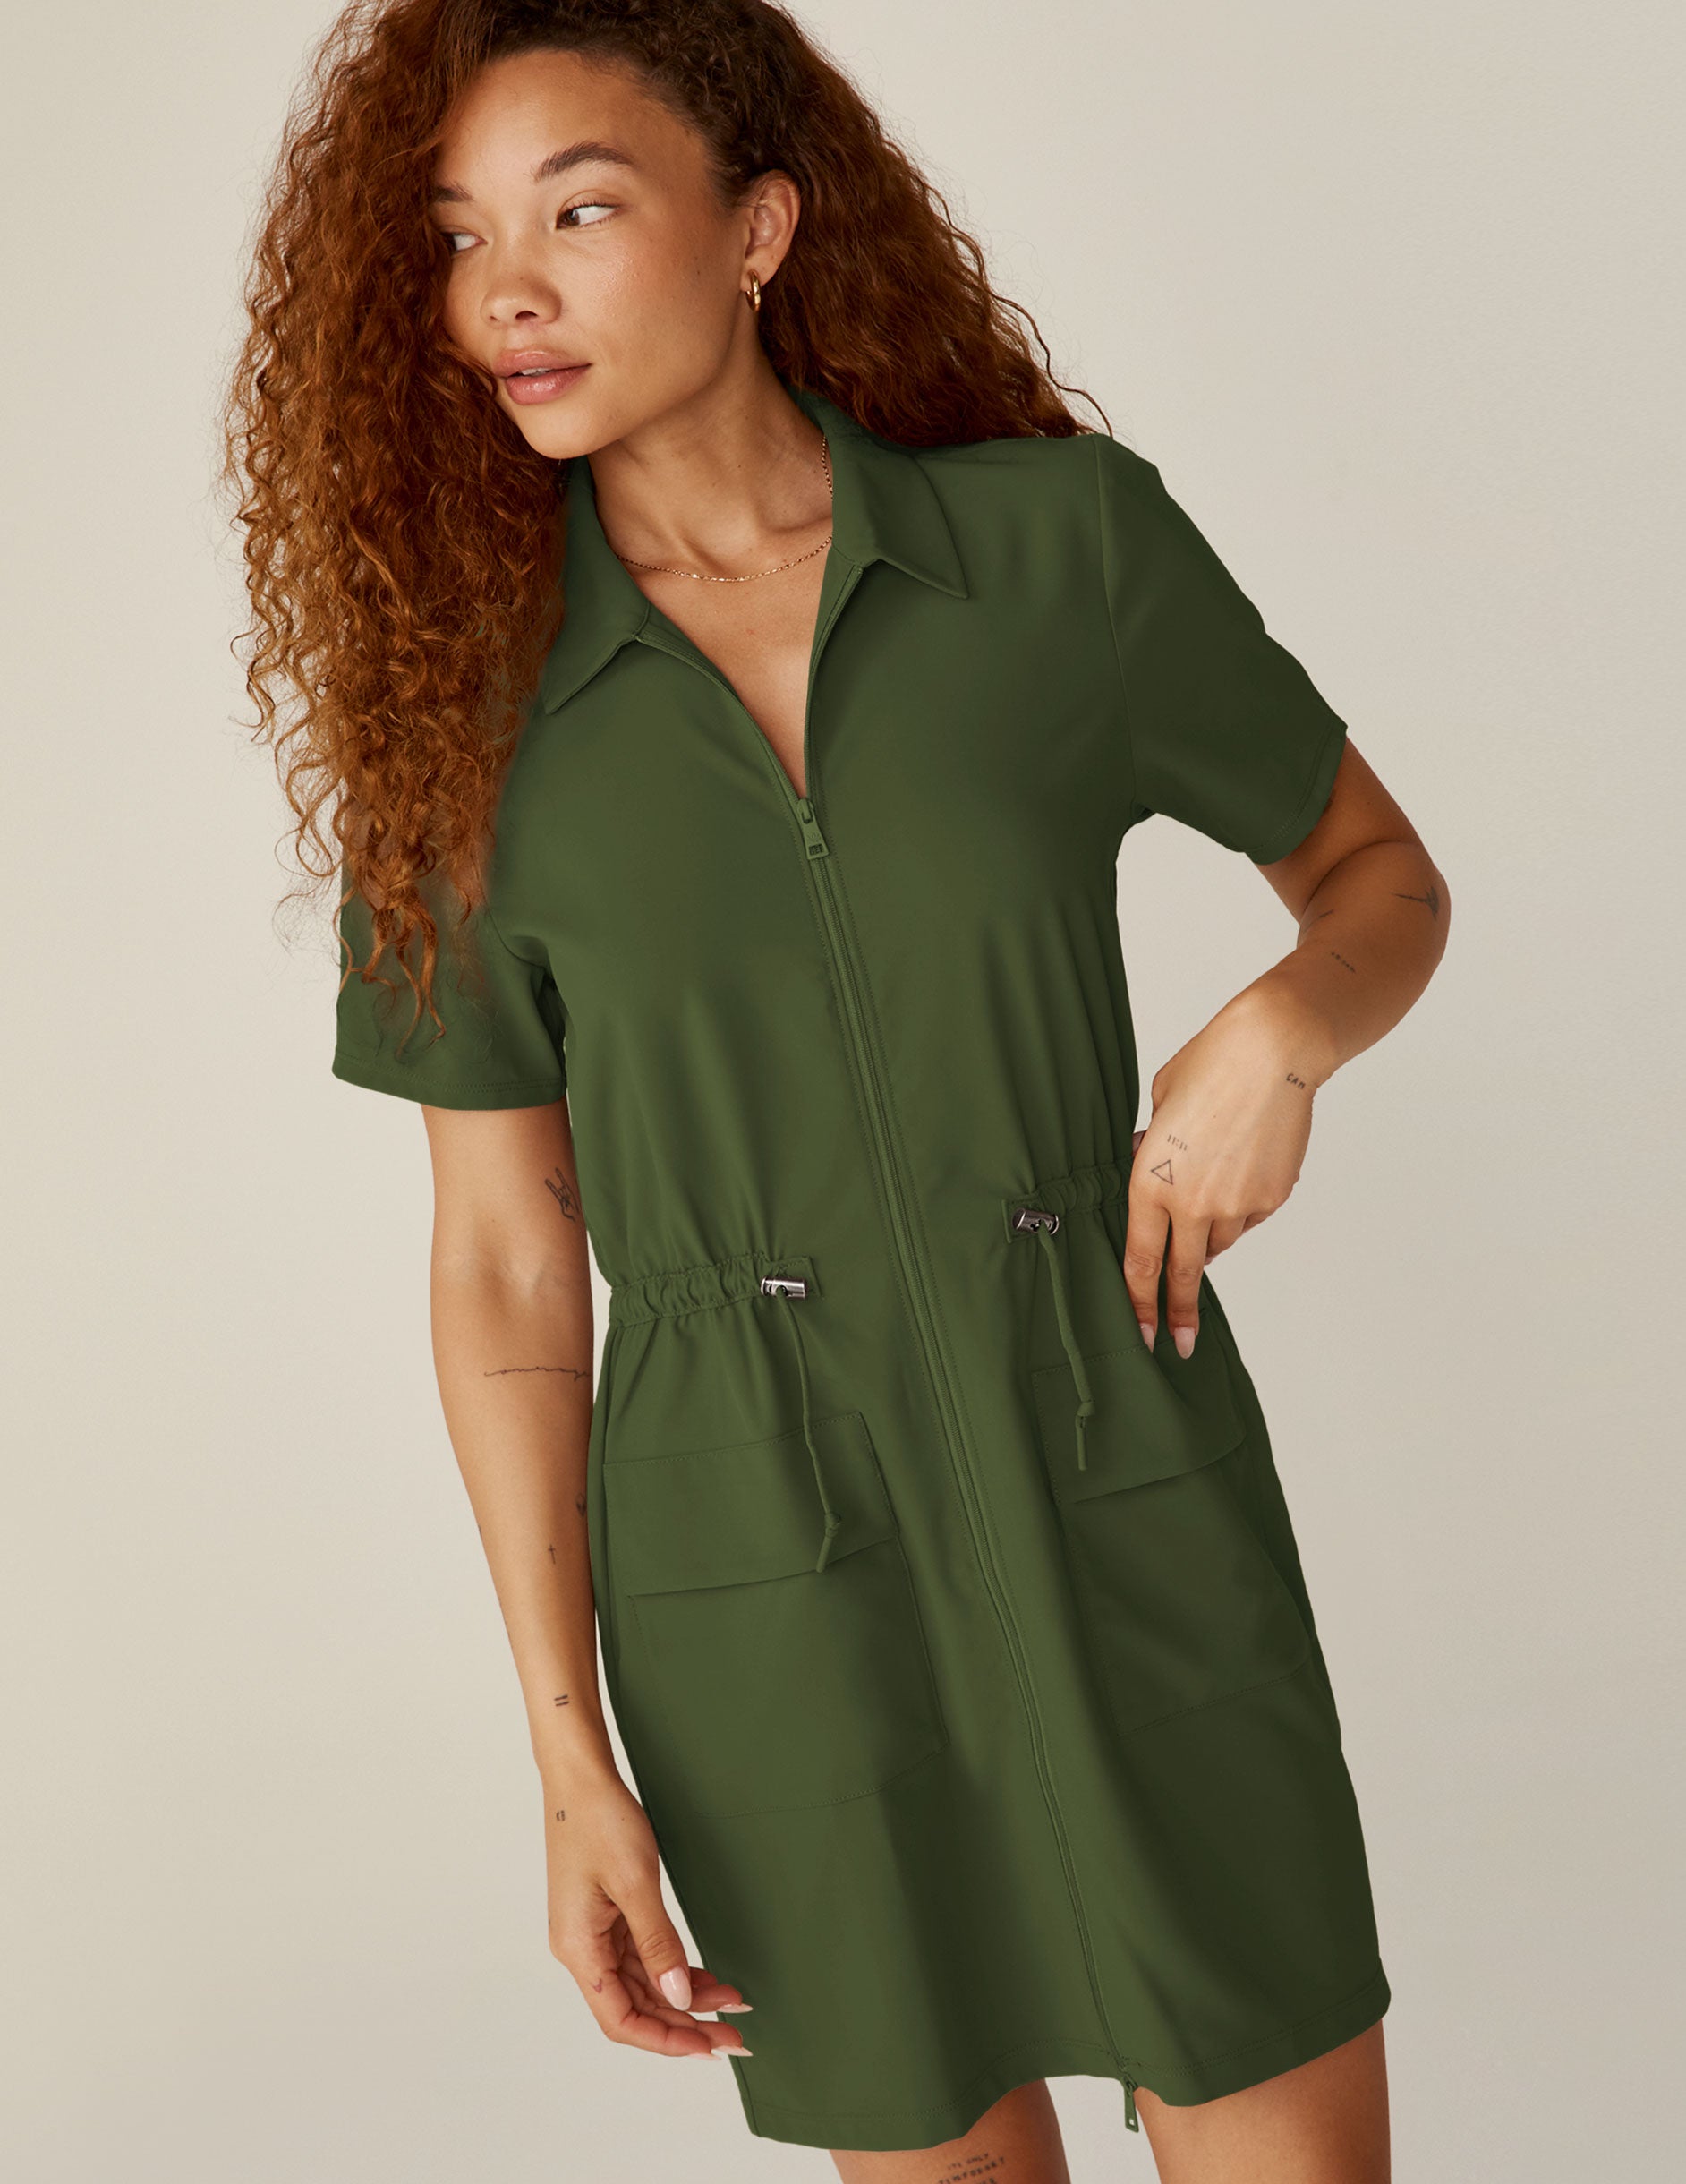 green zip-up mini dress with a drawstring at waistband and pockets.